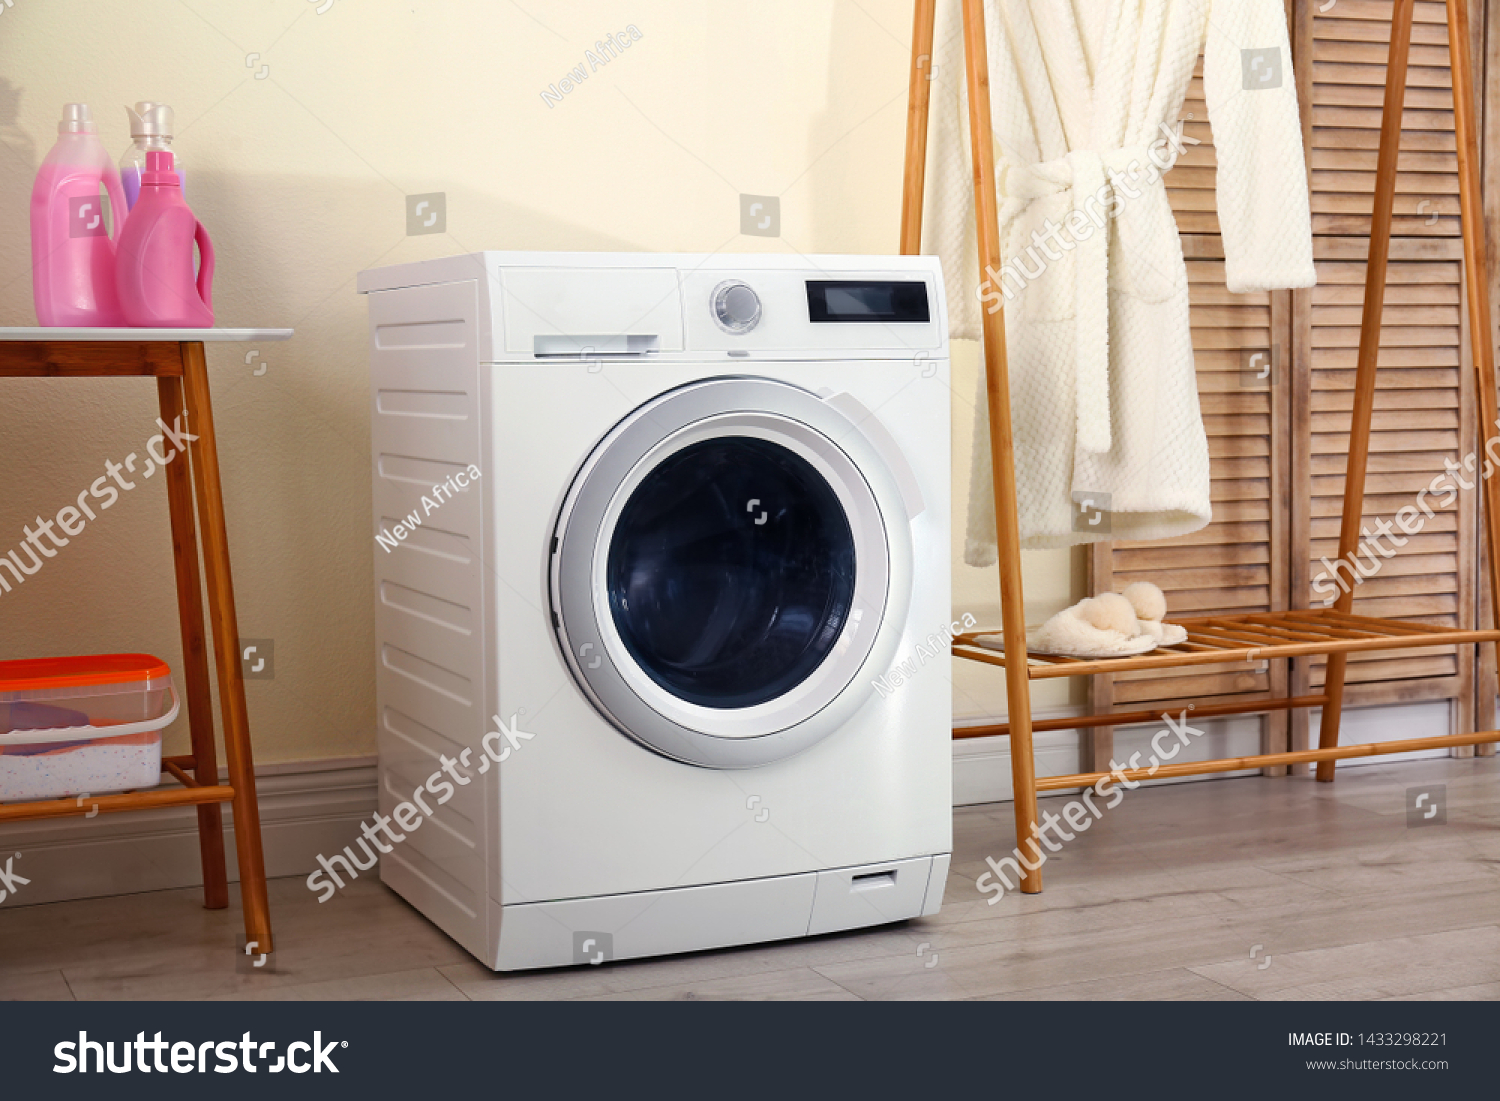 Laundry room interior with modern washing machine #1433298221